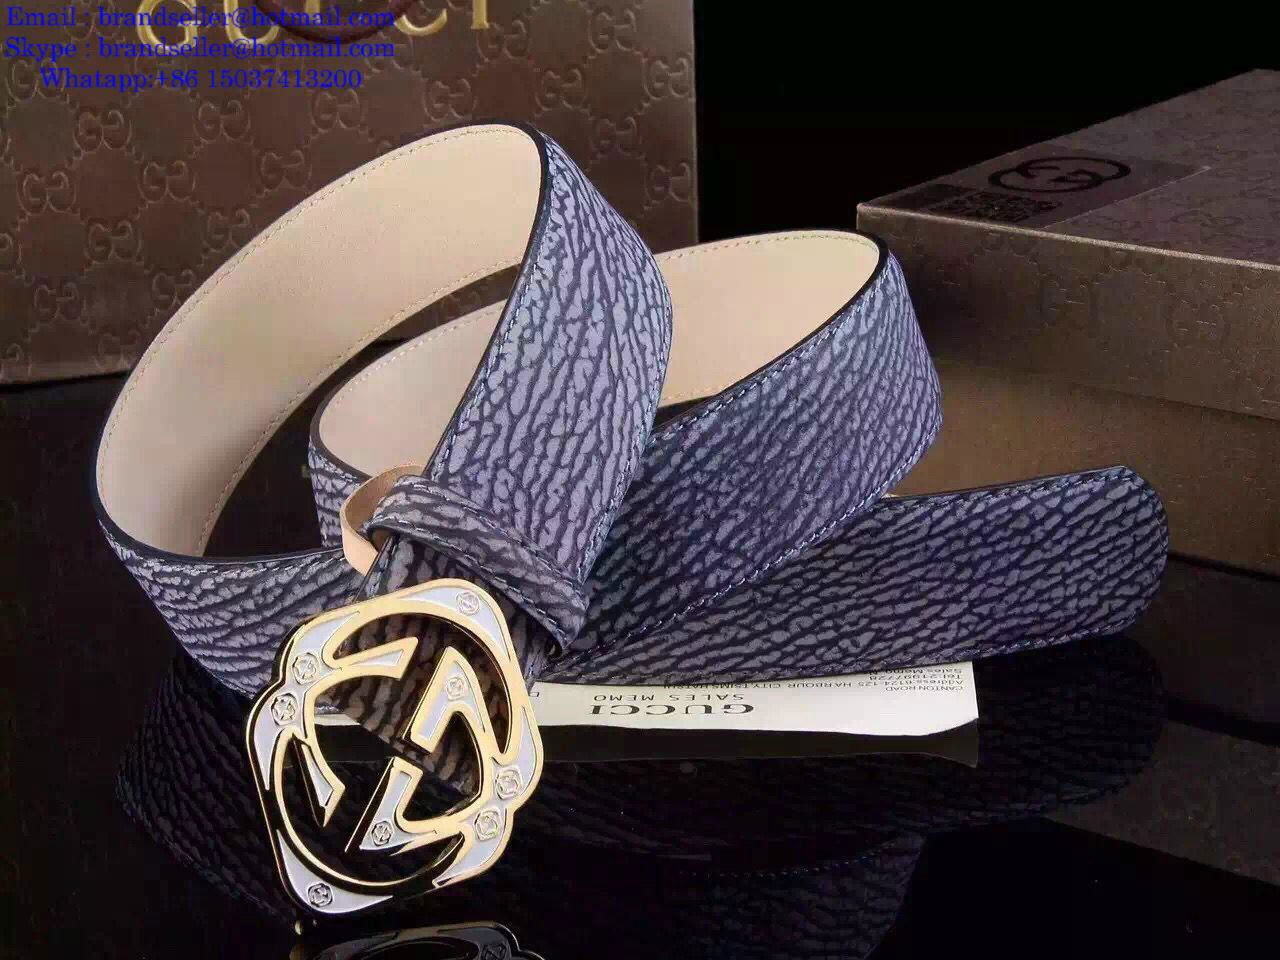 wholesale Salvatore Ferragamo Belts Gucci belts Brand LV belts Hermes Belt (China Trading ...